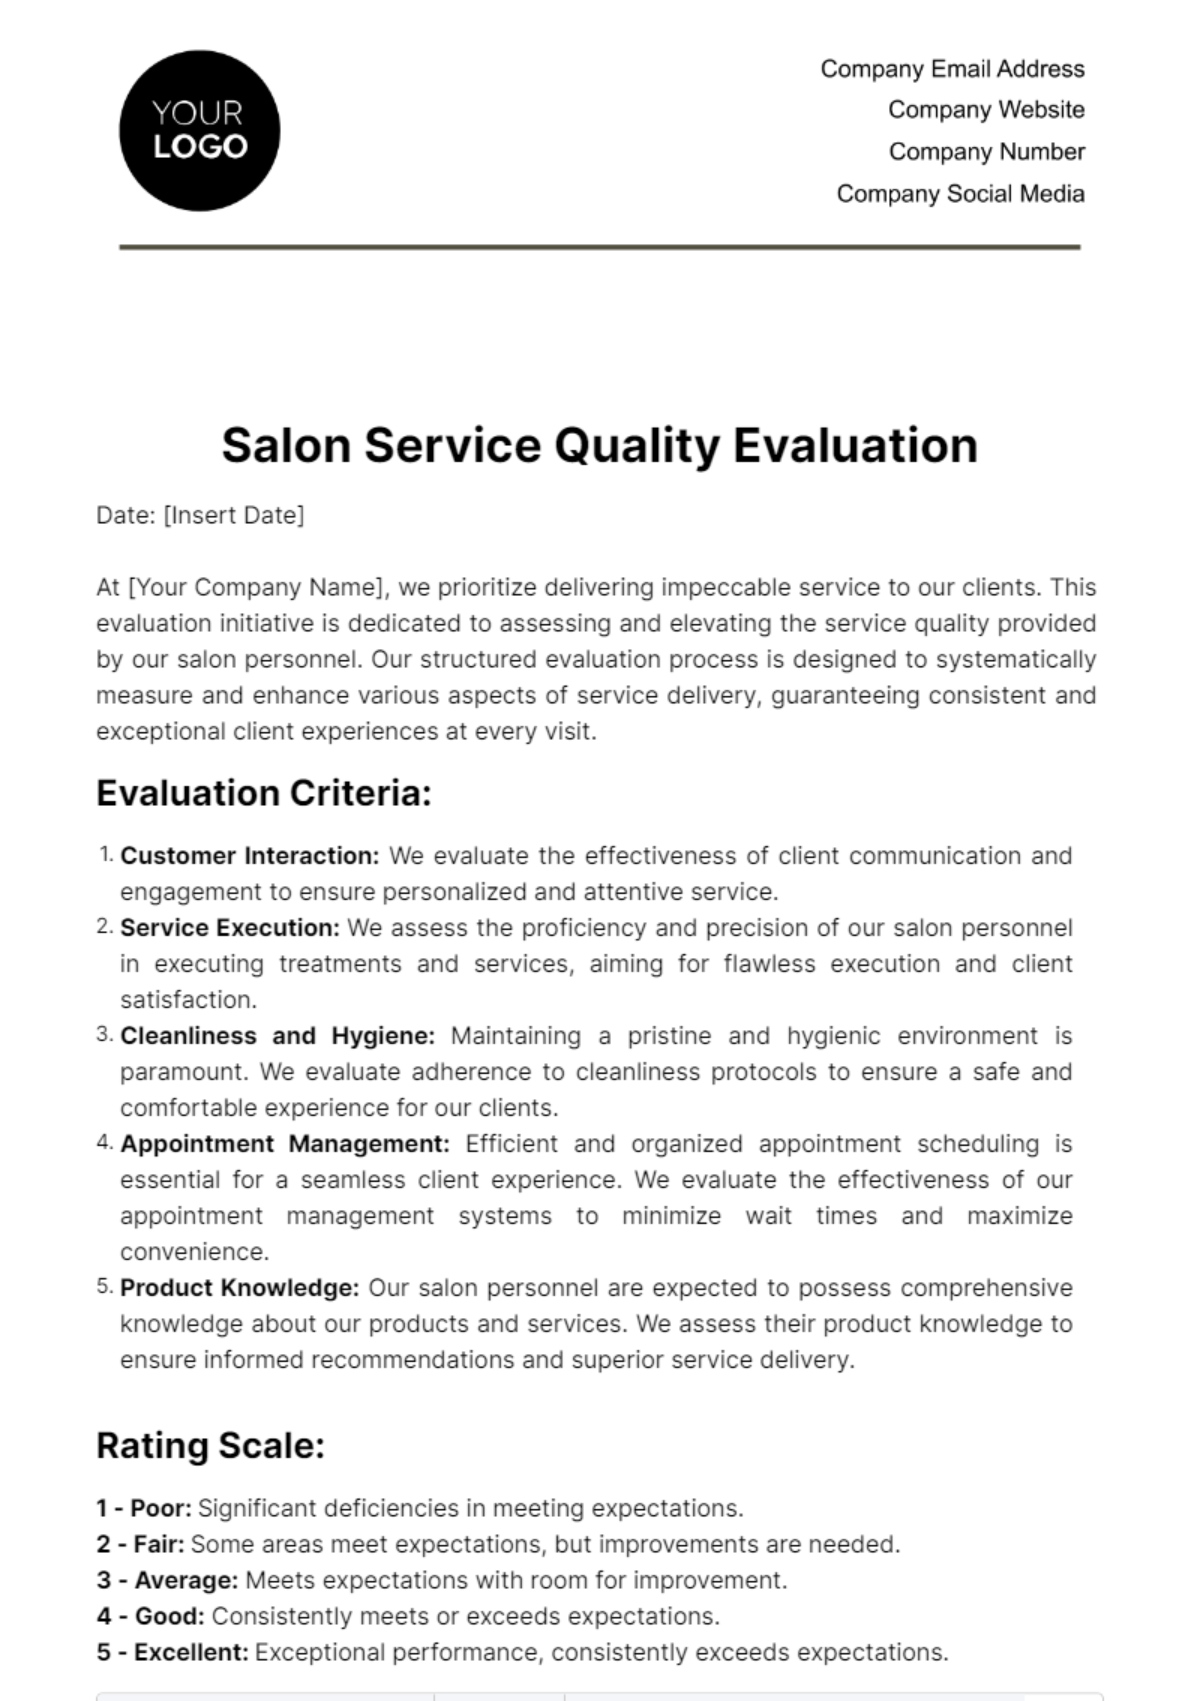 Salon Service Quality Evaluation Template